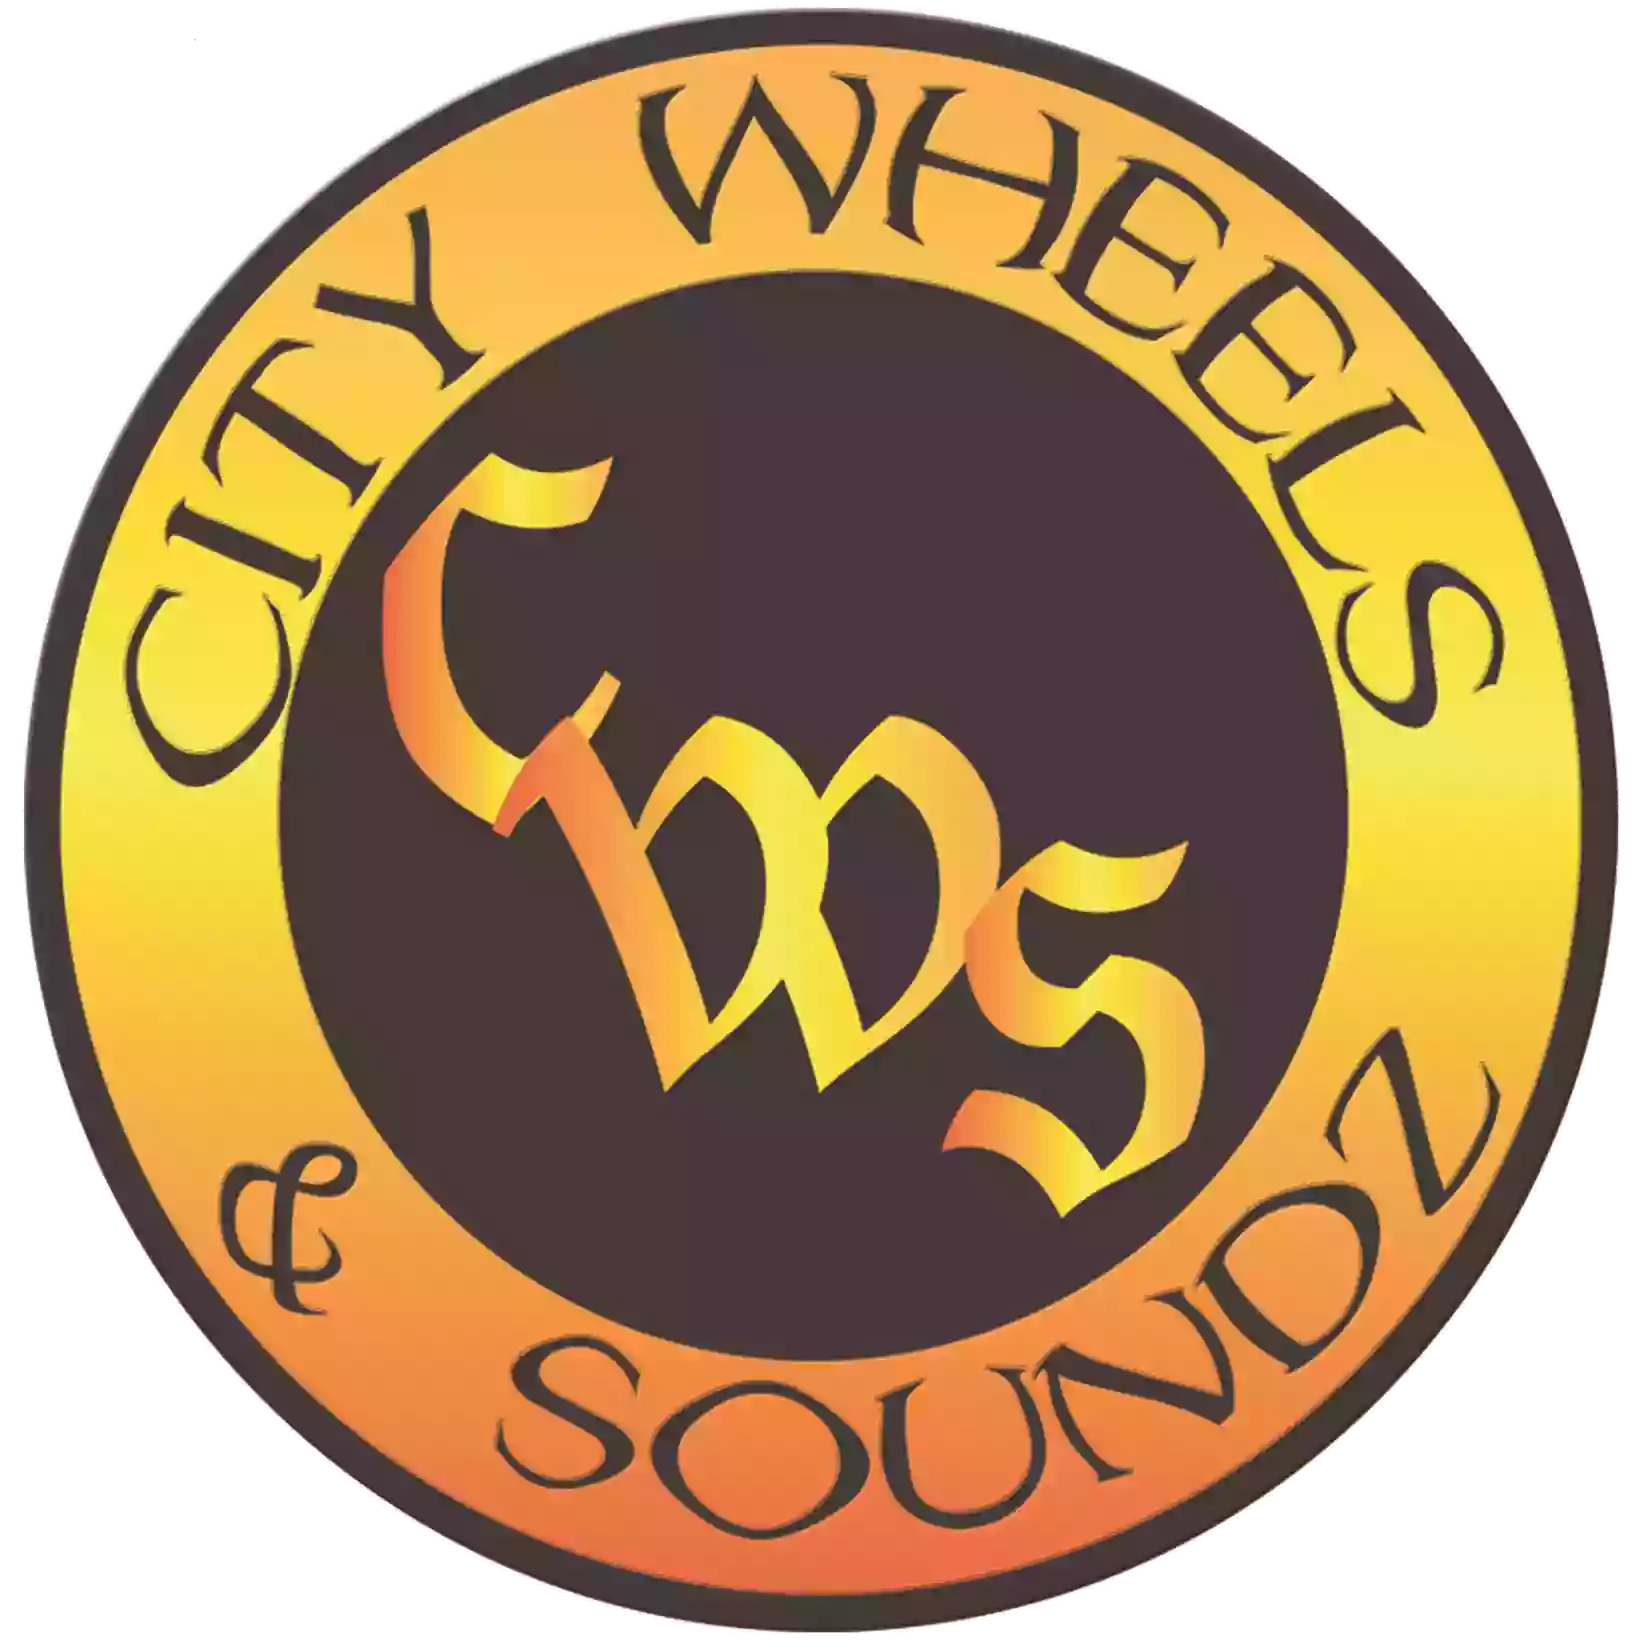 City Wheels & Soundz